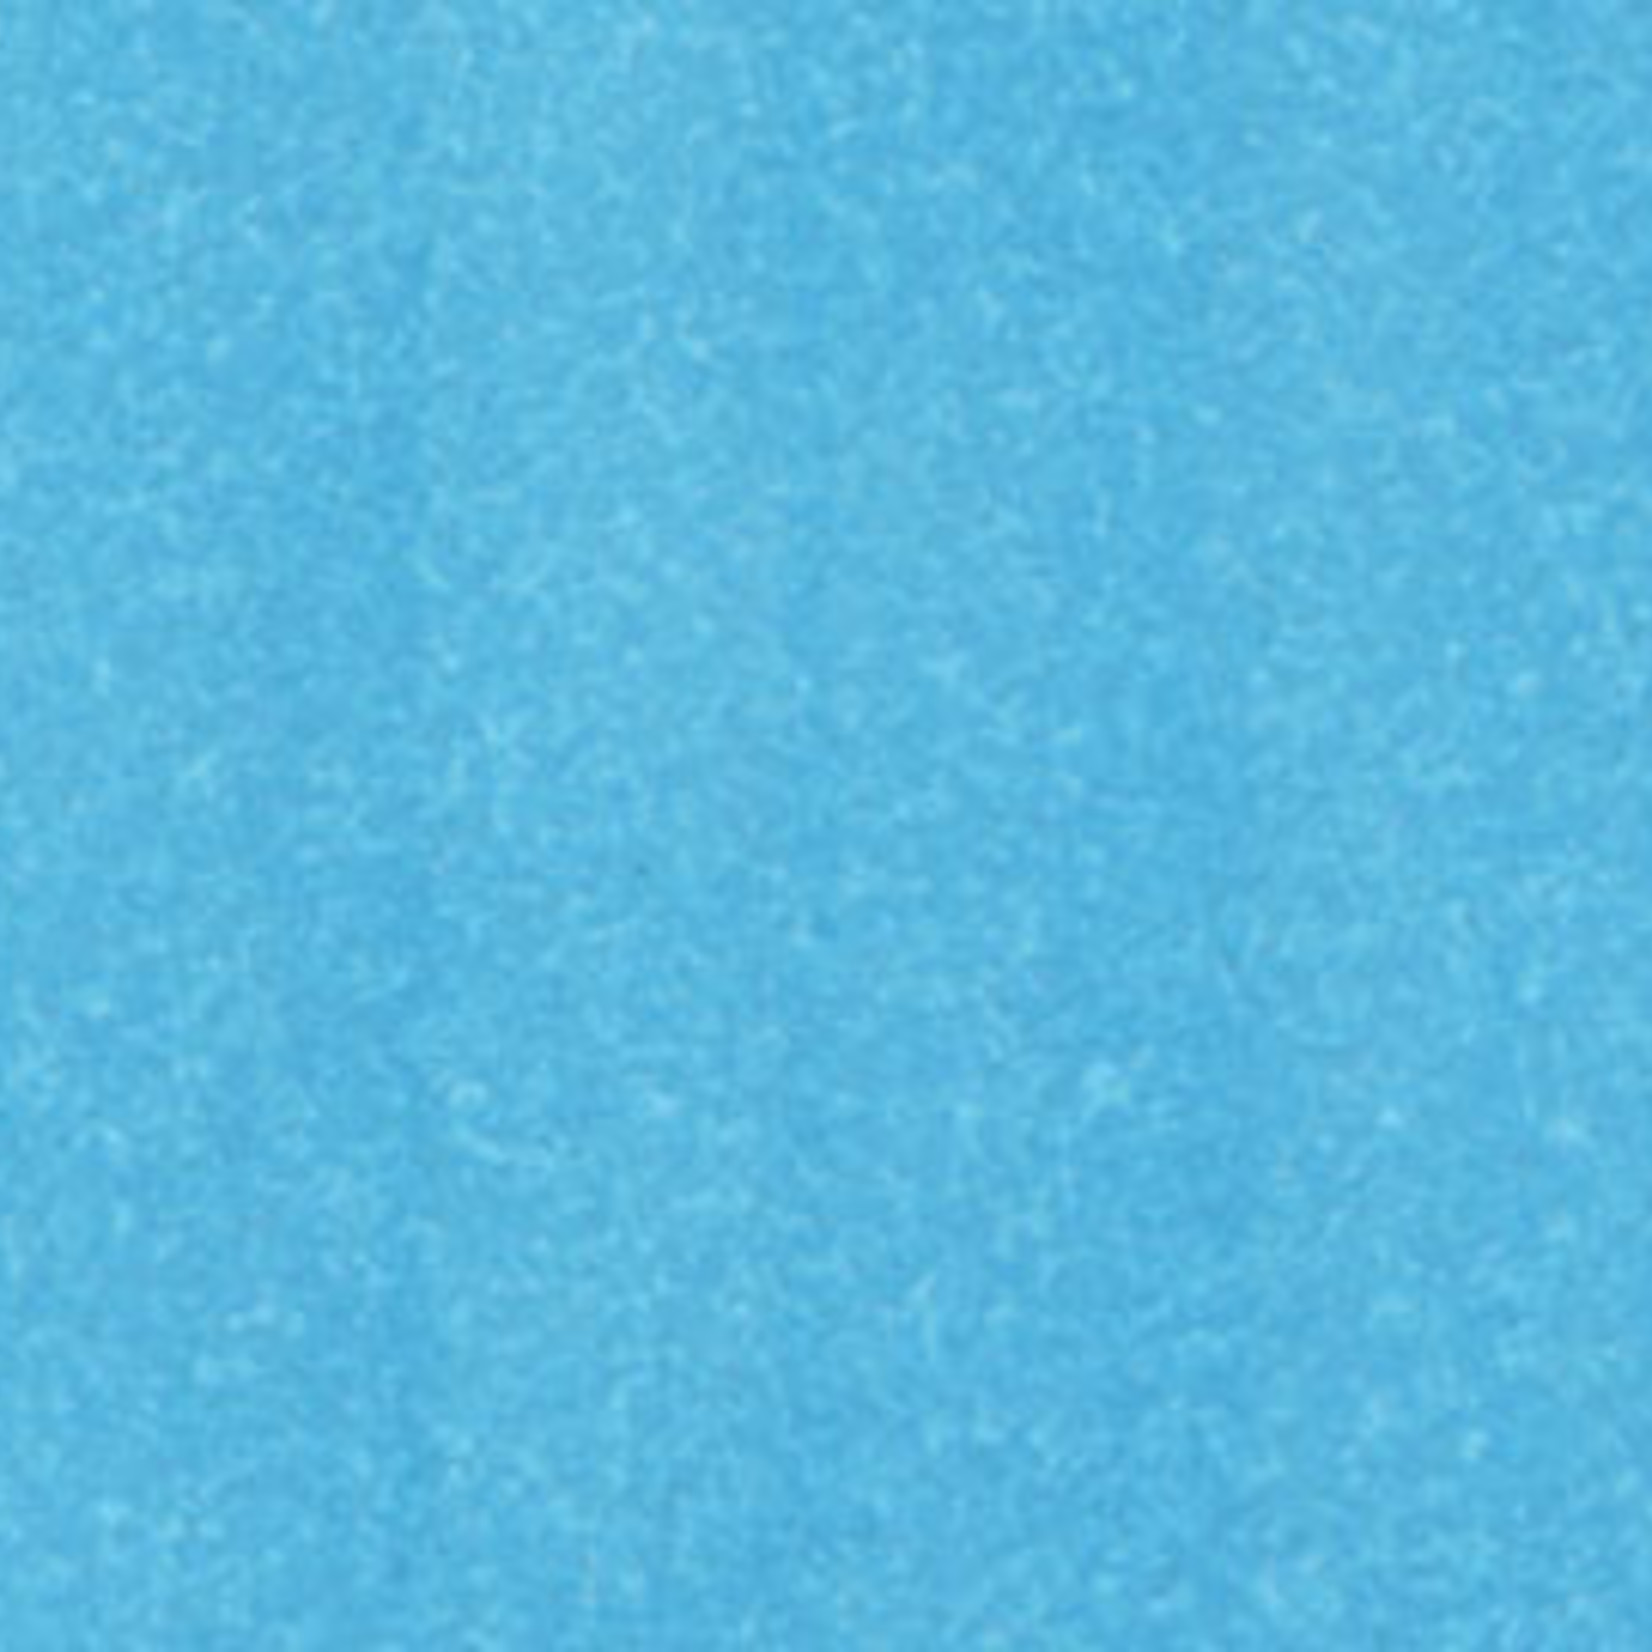 COPIC COPIC SKETCH B02 ROBIN'S EGG BLUE